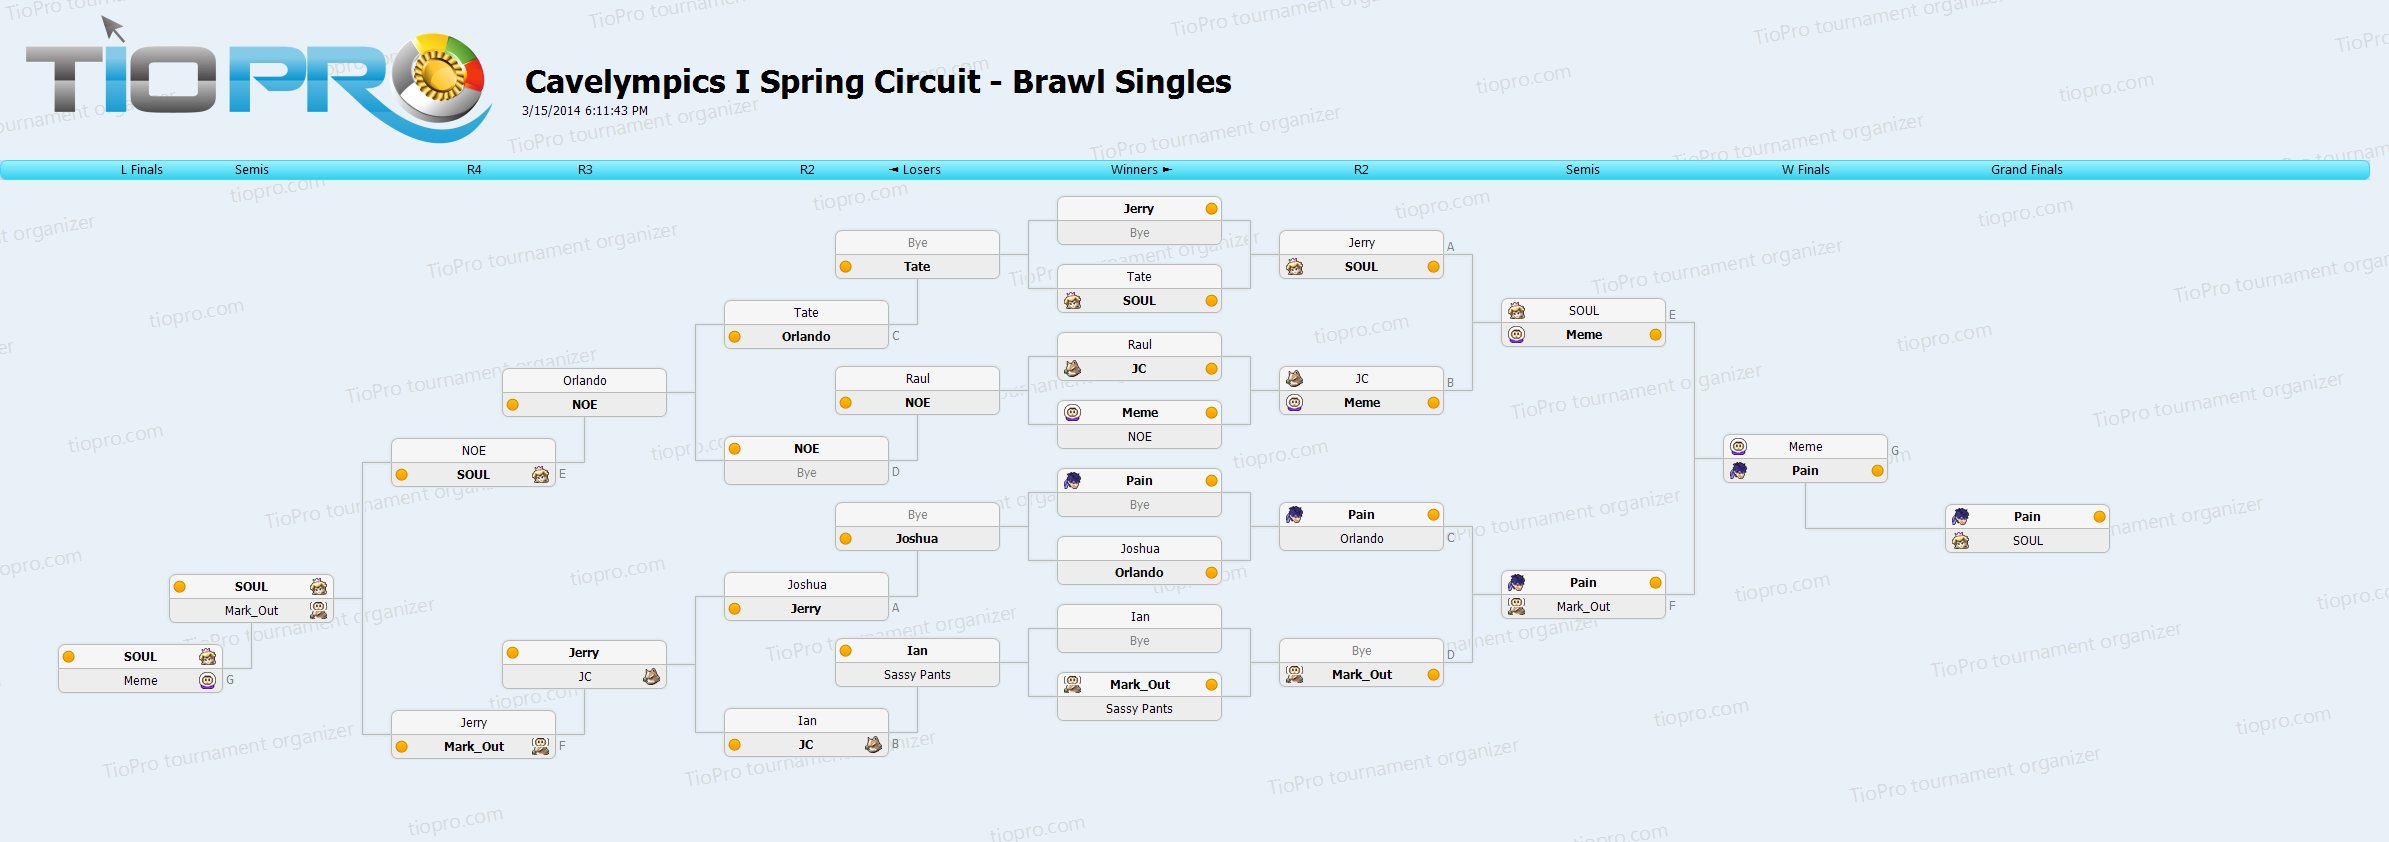 Cavelympics I Spring Circuit - Brawl Singles